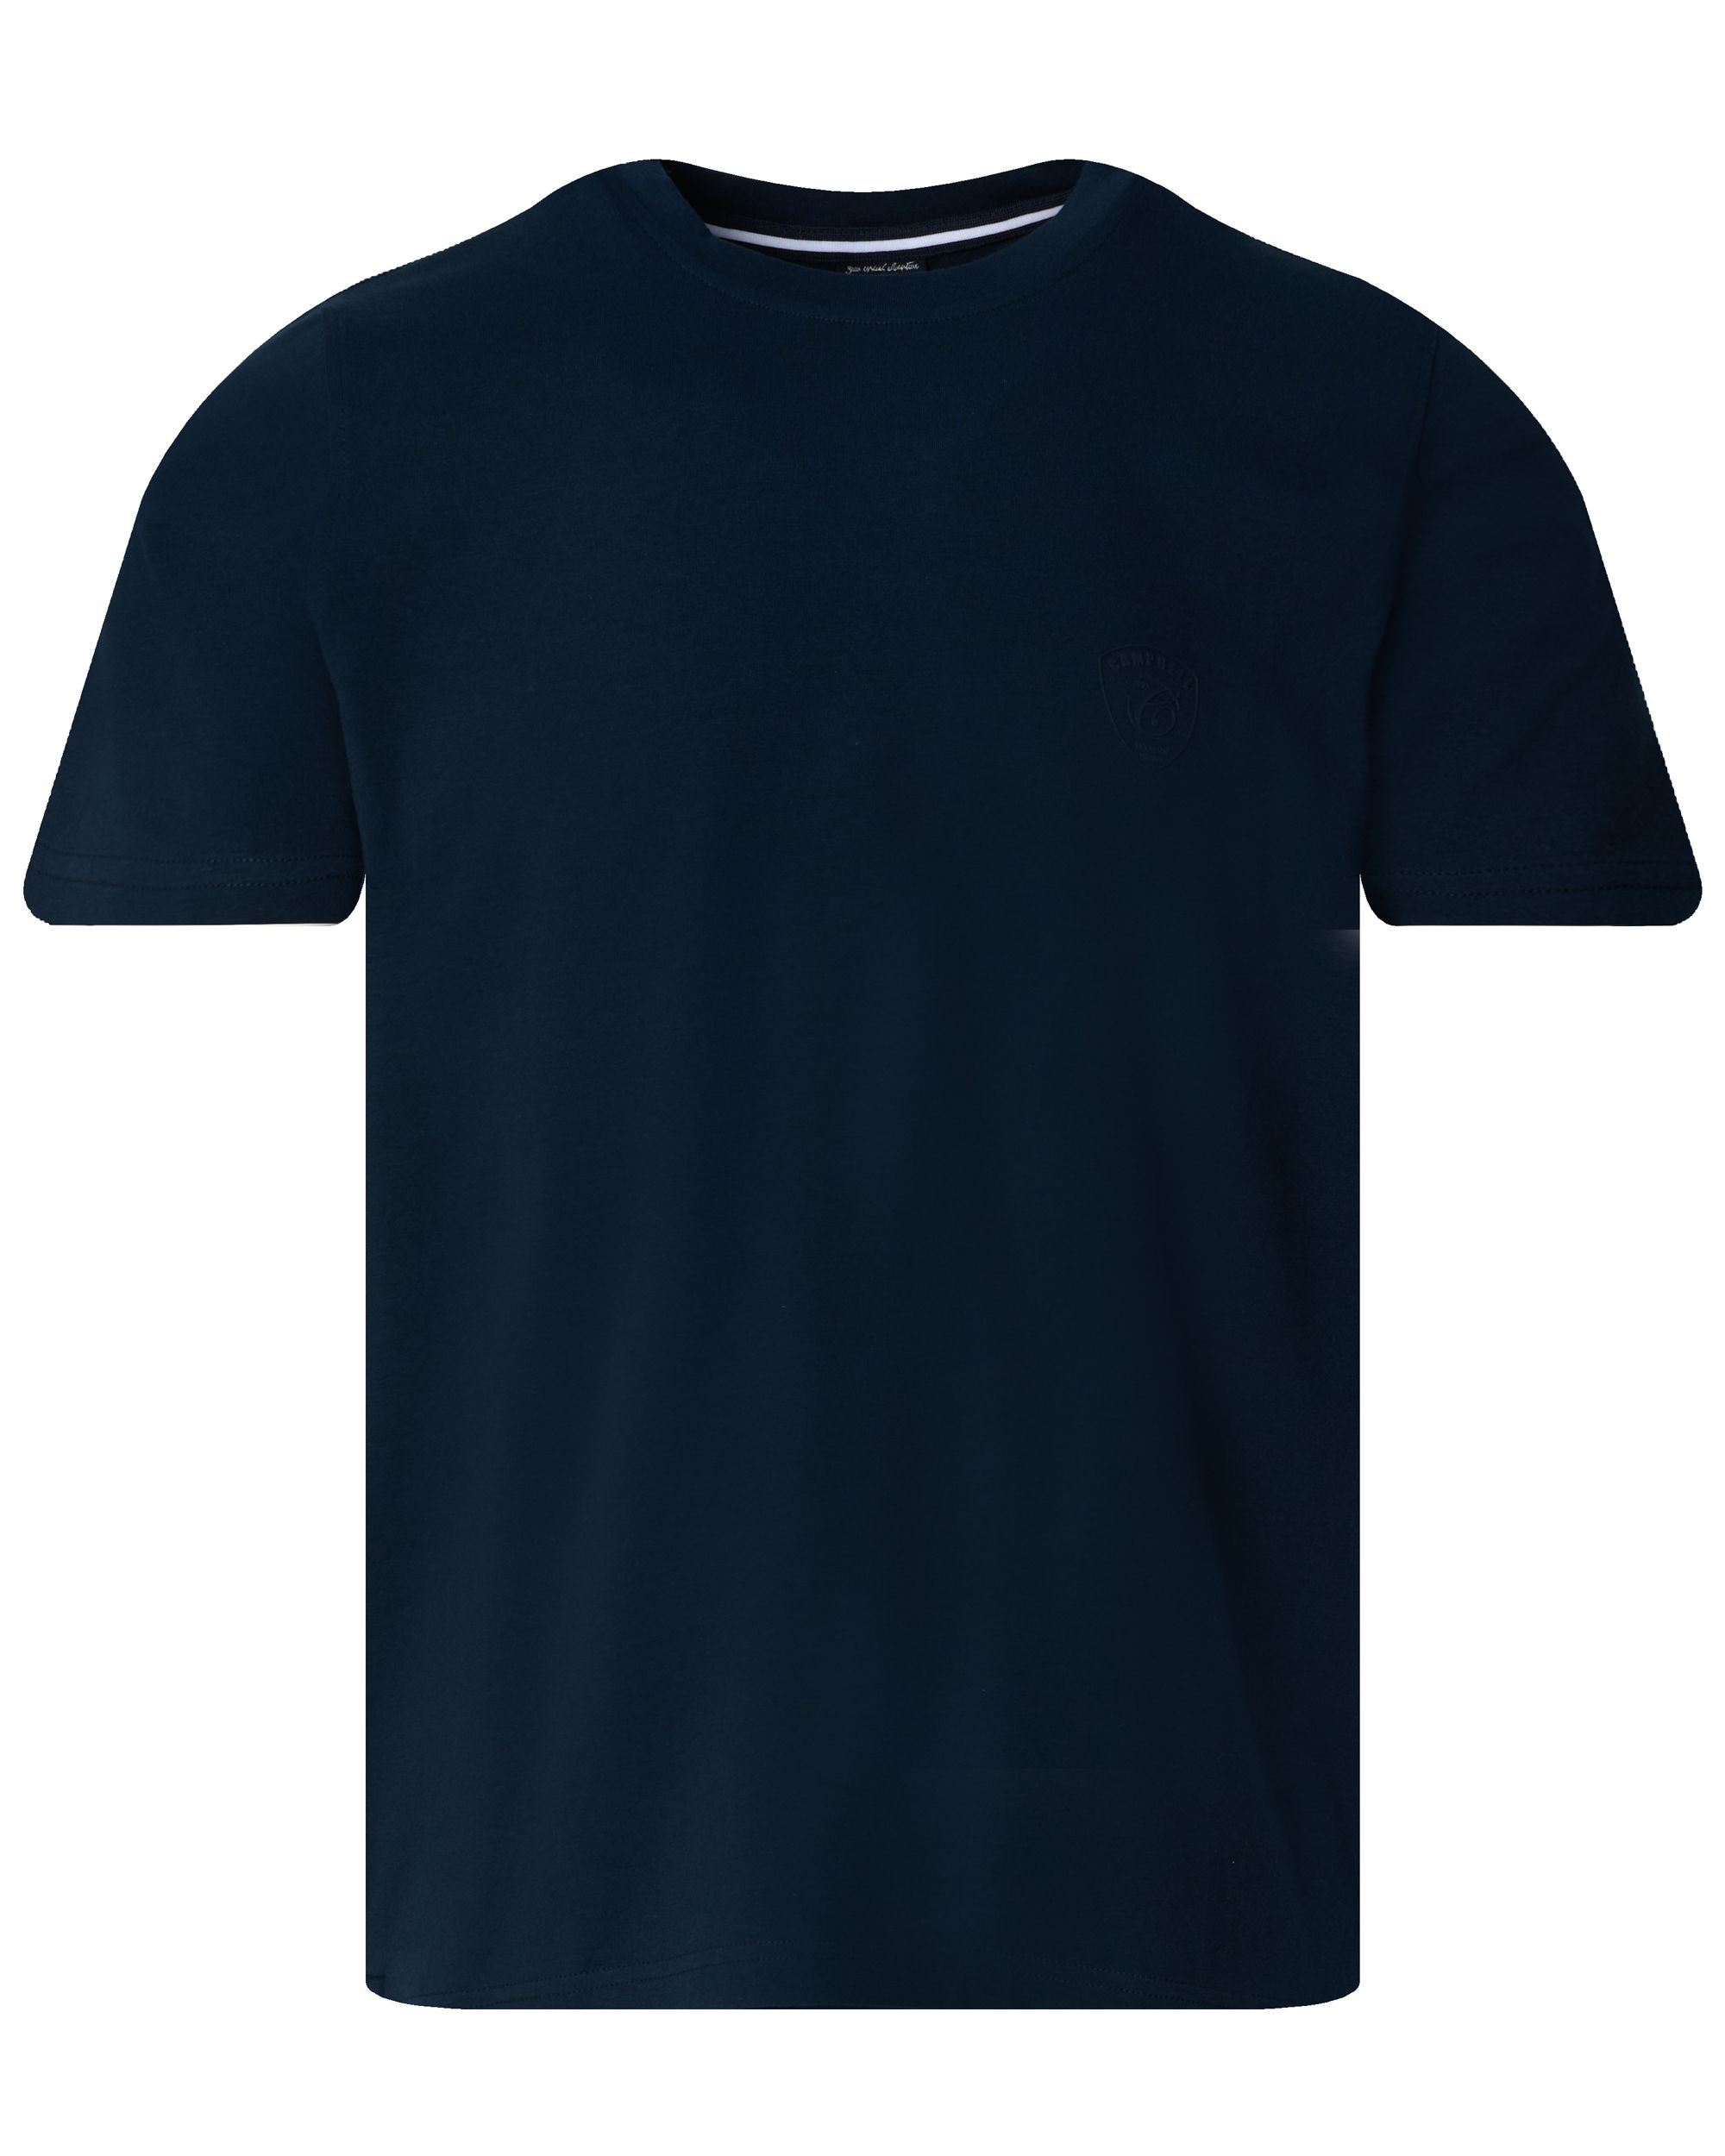 Campbell Classic Soho T-shirt KM NAVY 081503-001-L